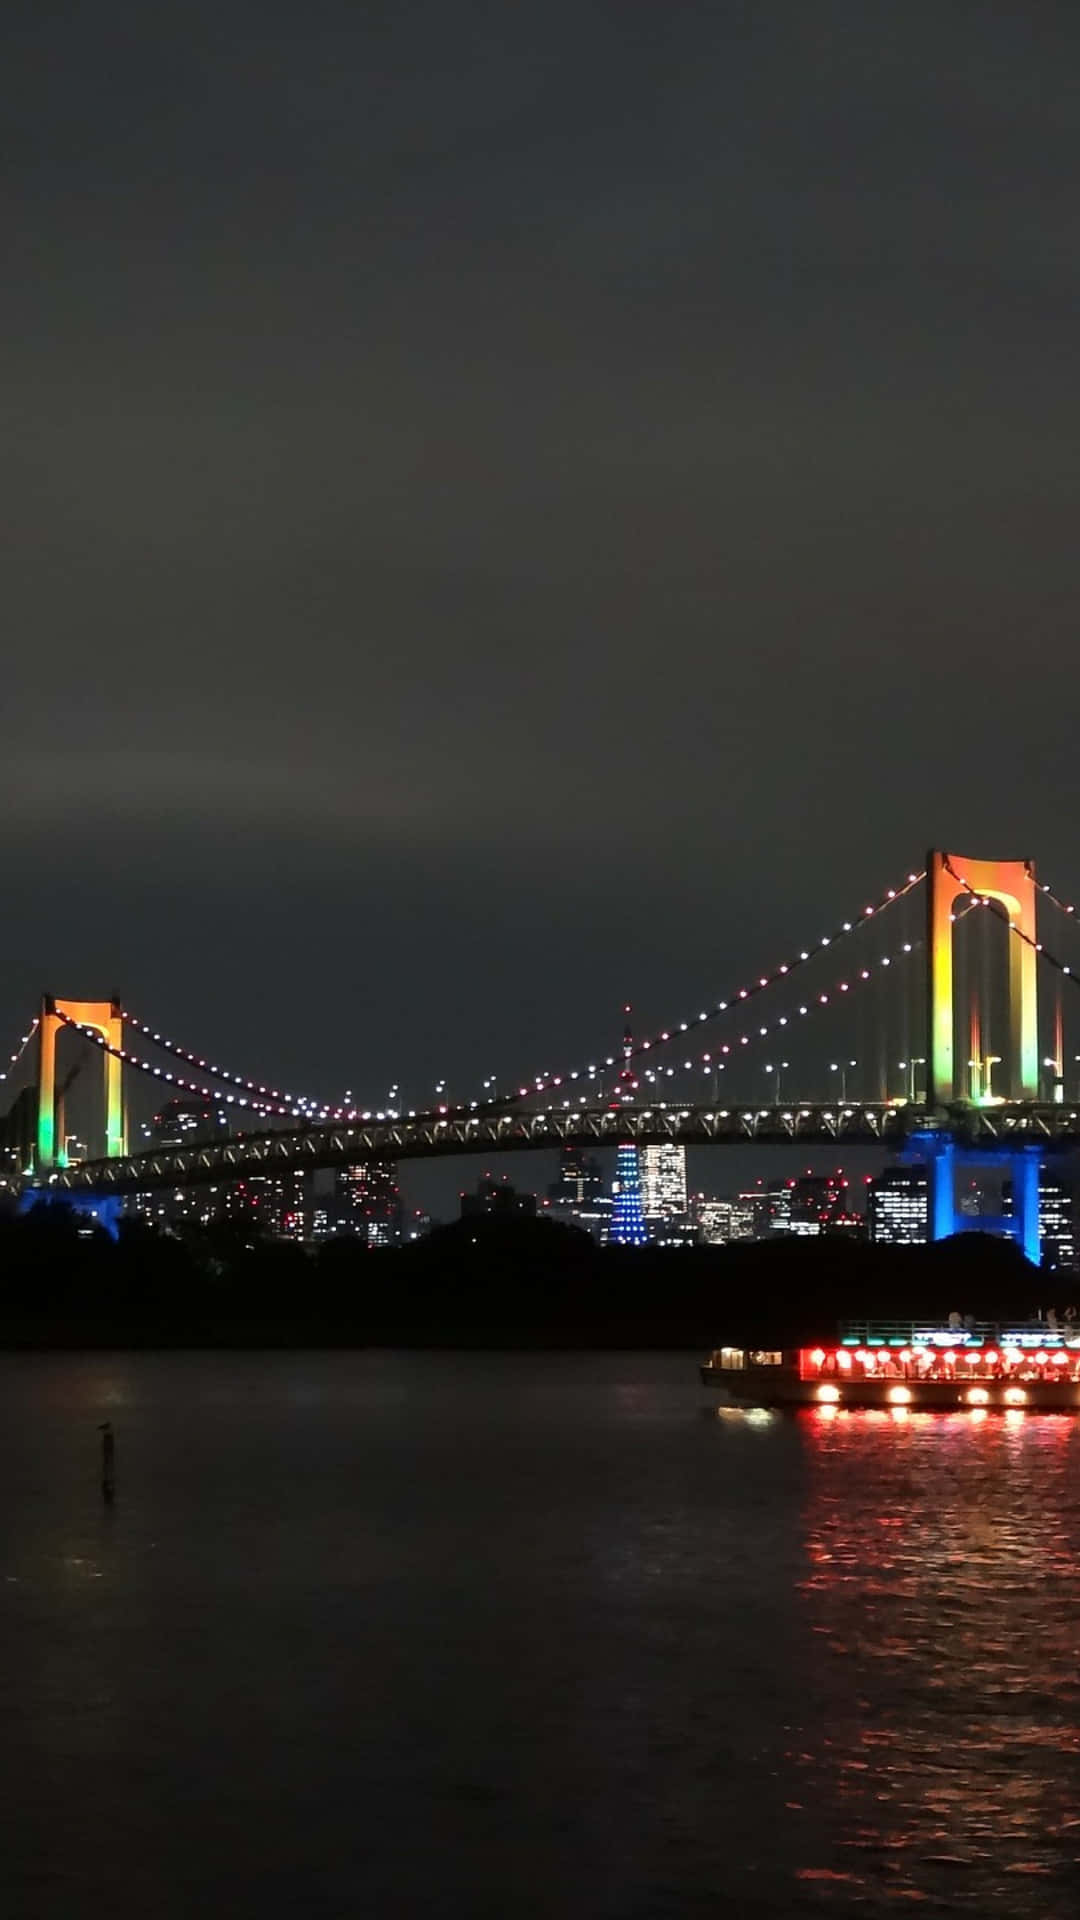 A Rainbow Bridge Is Lit Up At Night